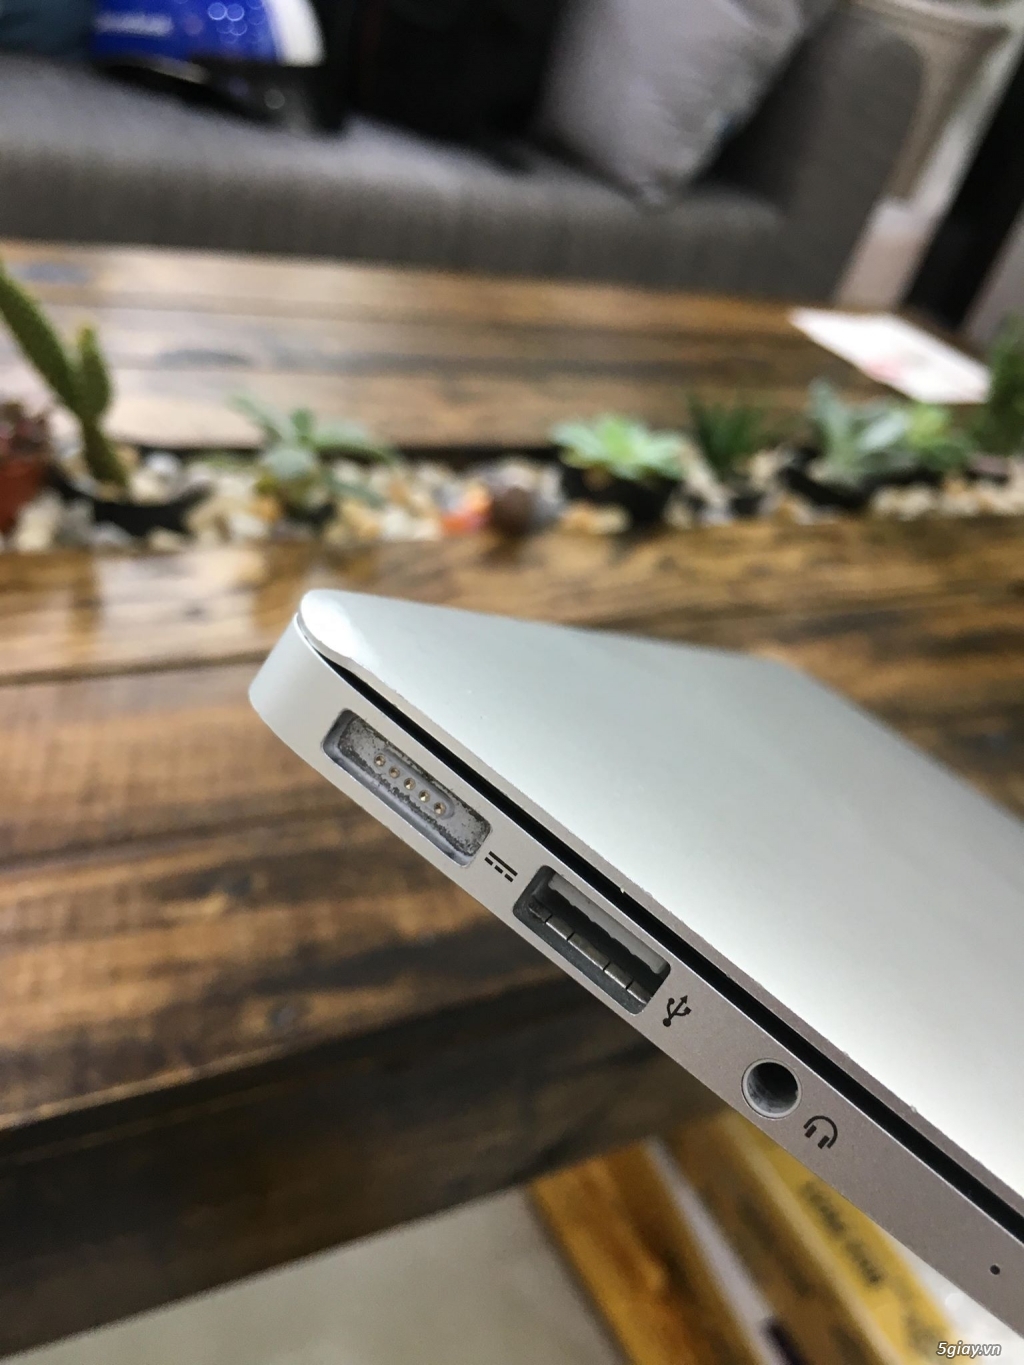 Macbook air 11 inch 2015 - 2